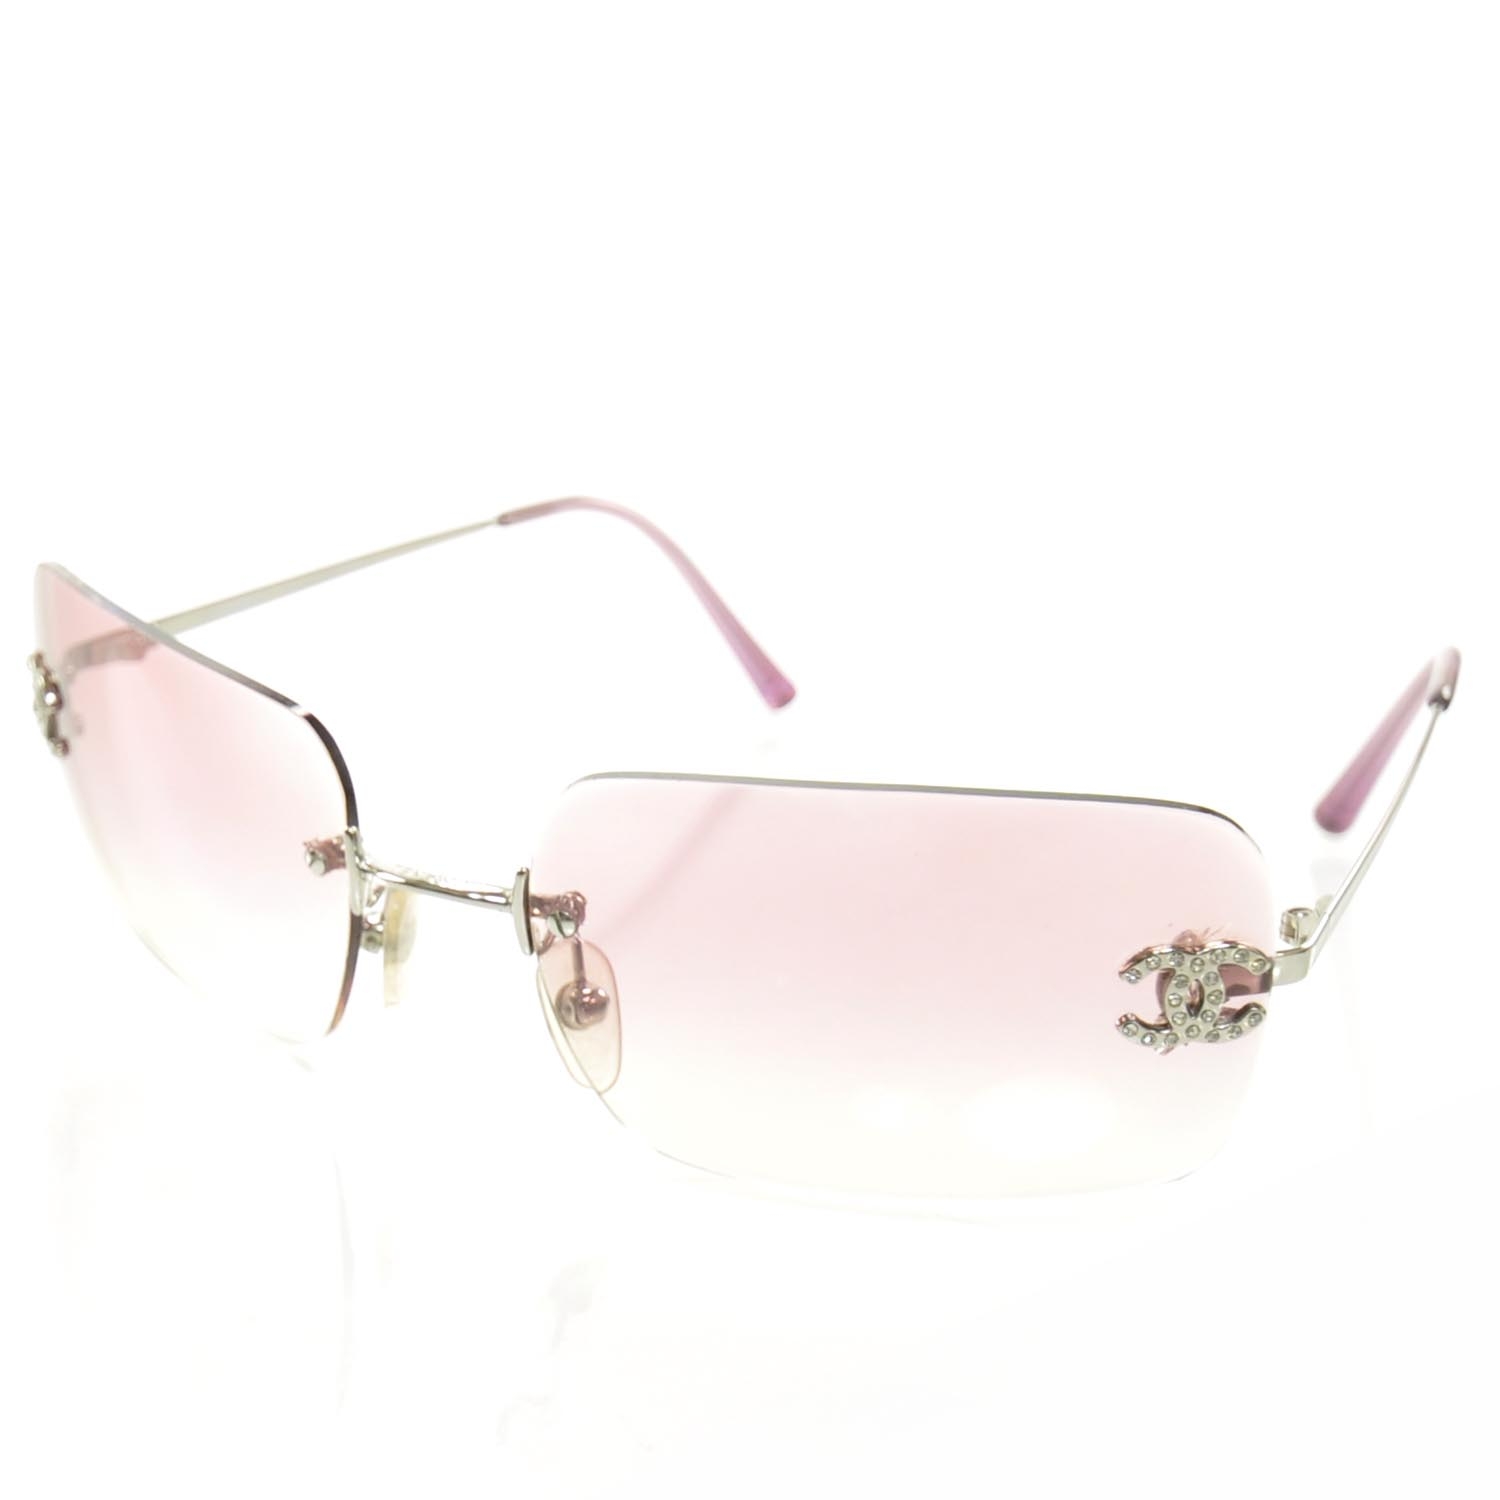 CHANEL Crystal CC Logo Sunglasses 4017 D Pink 26175